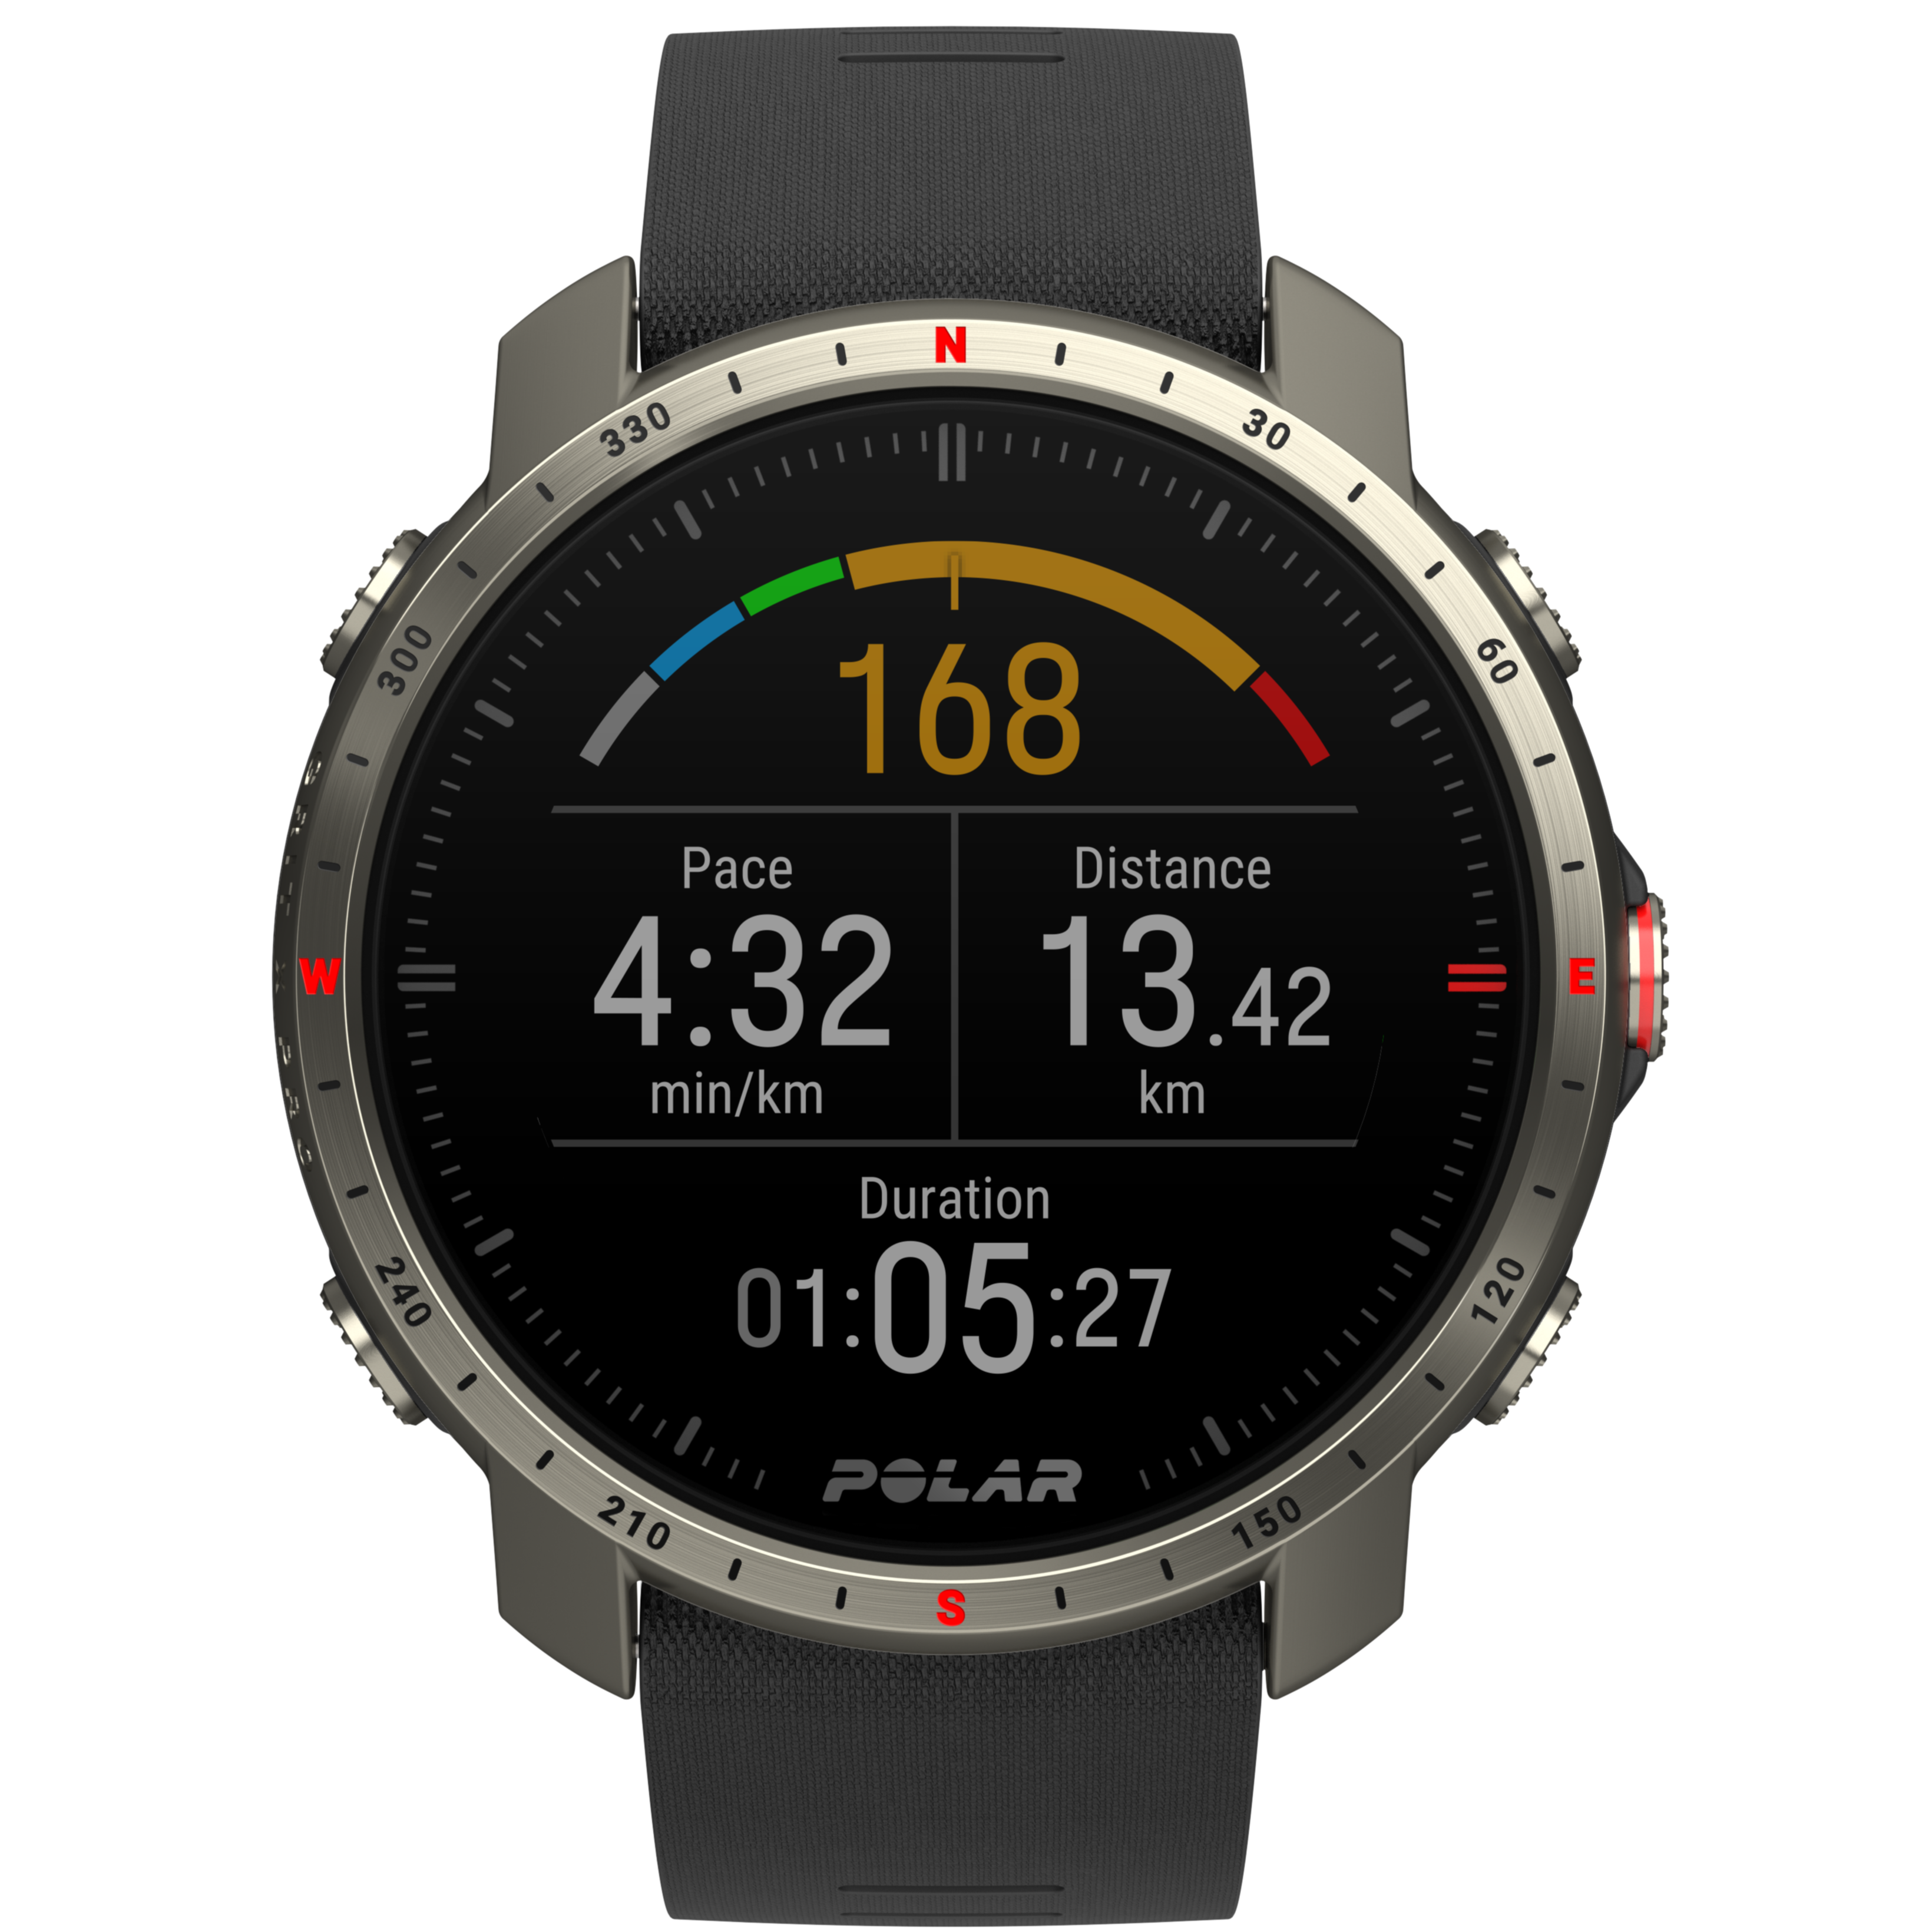 Polar's Vantage V2 sports watch has an epic battery life